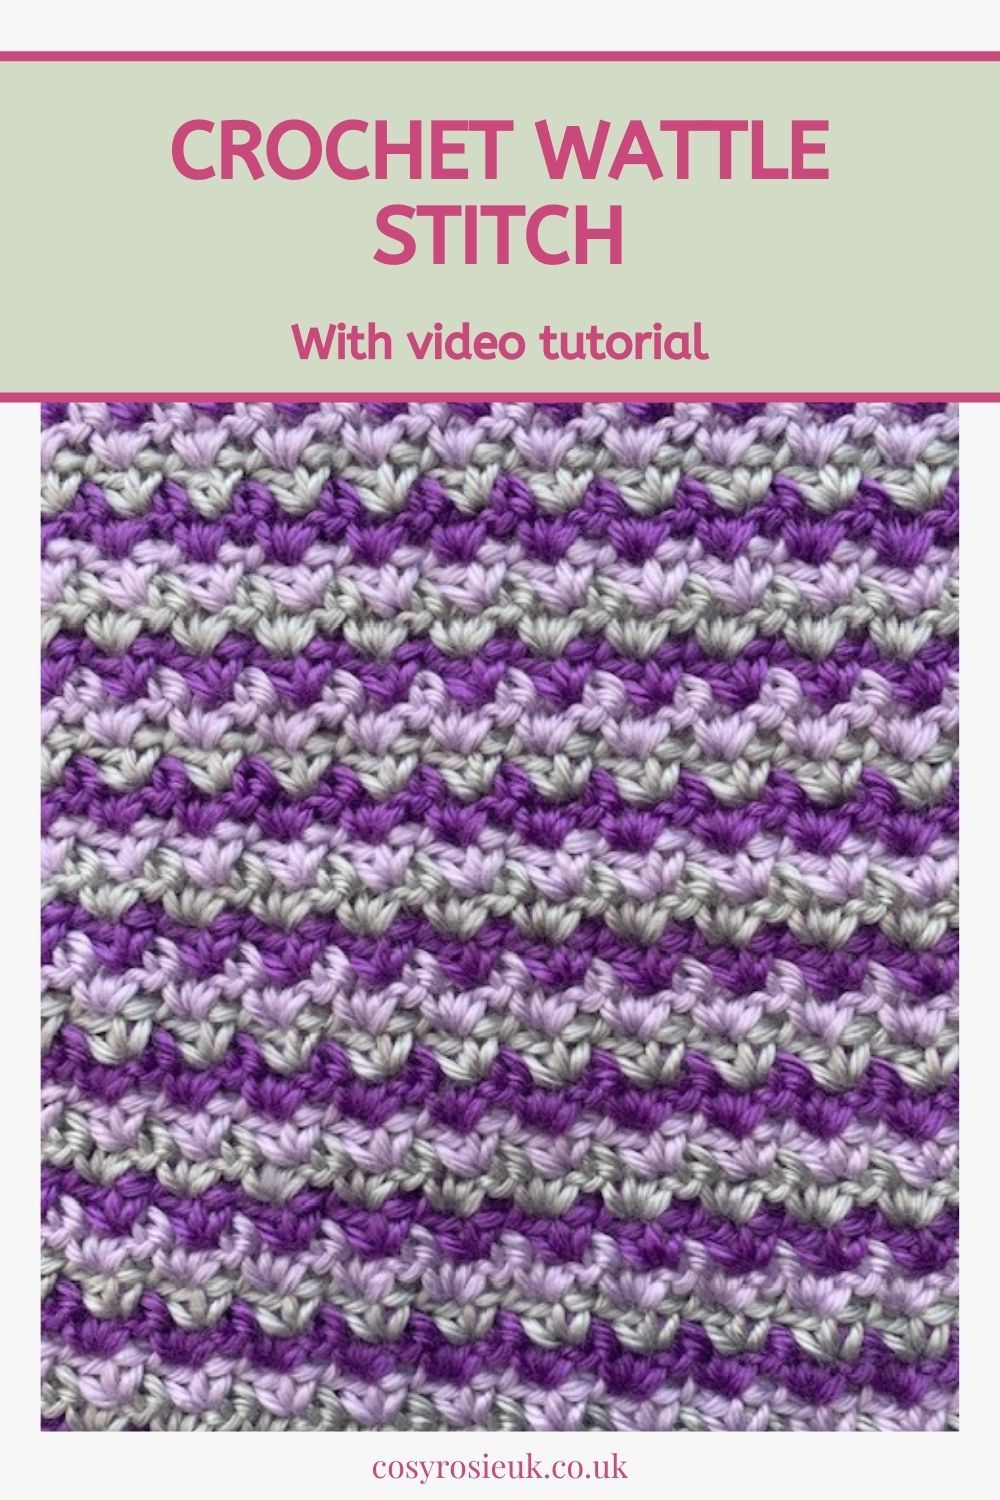 Crochet Wattle stitch tutorial